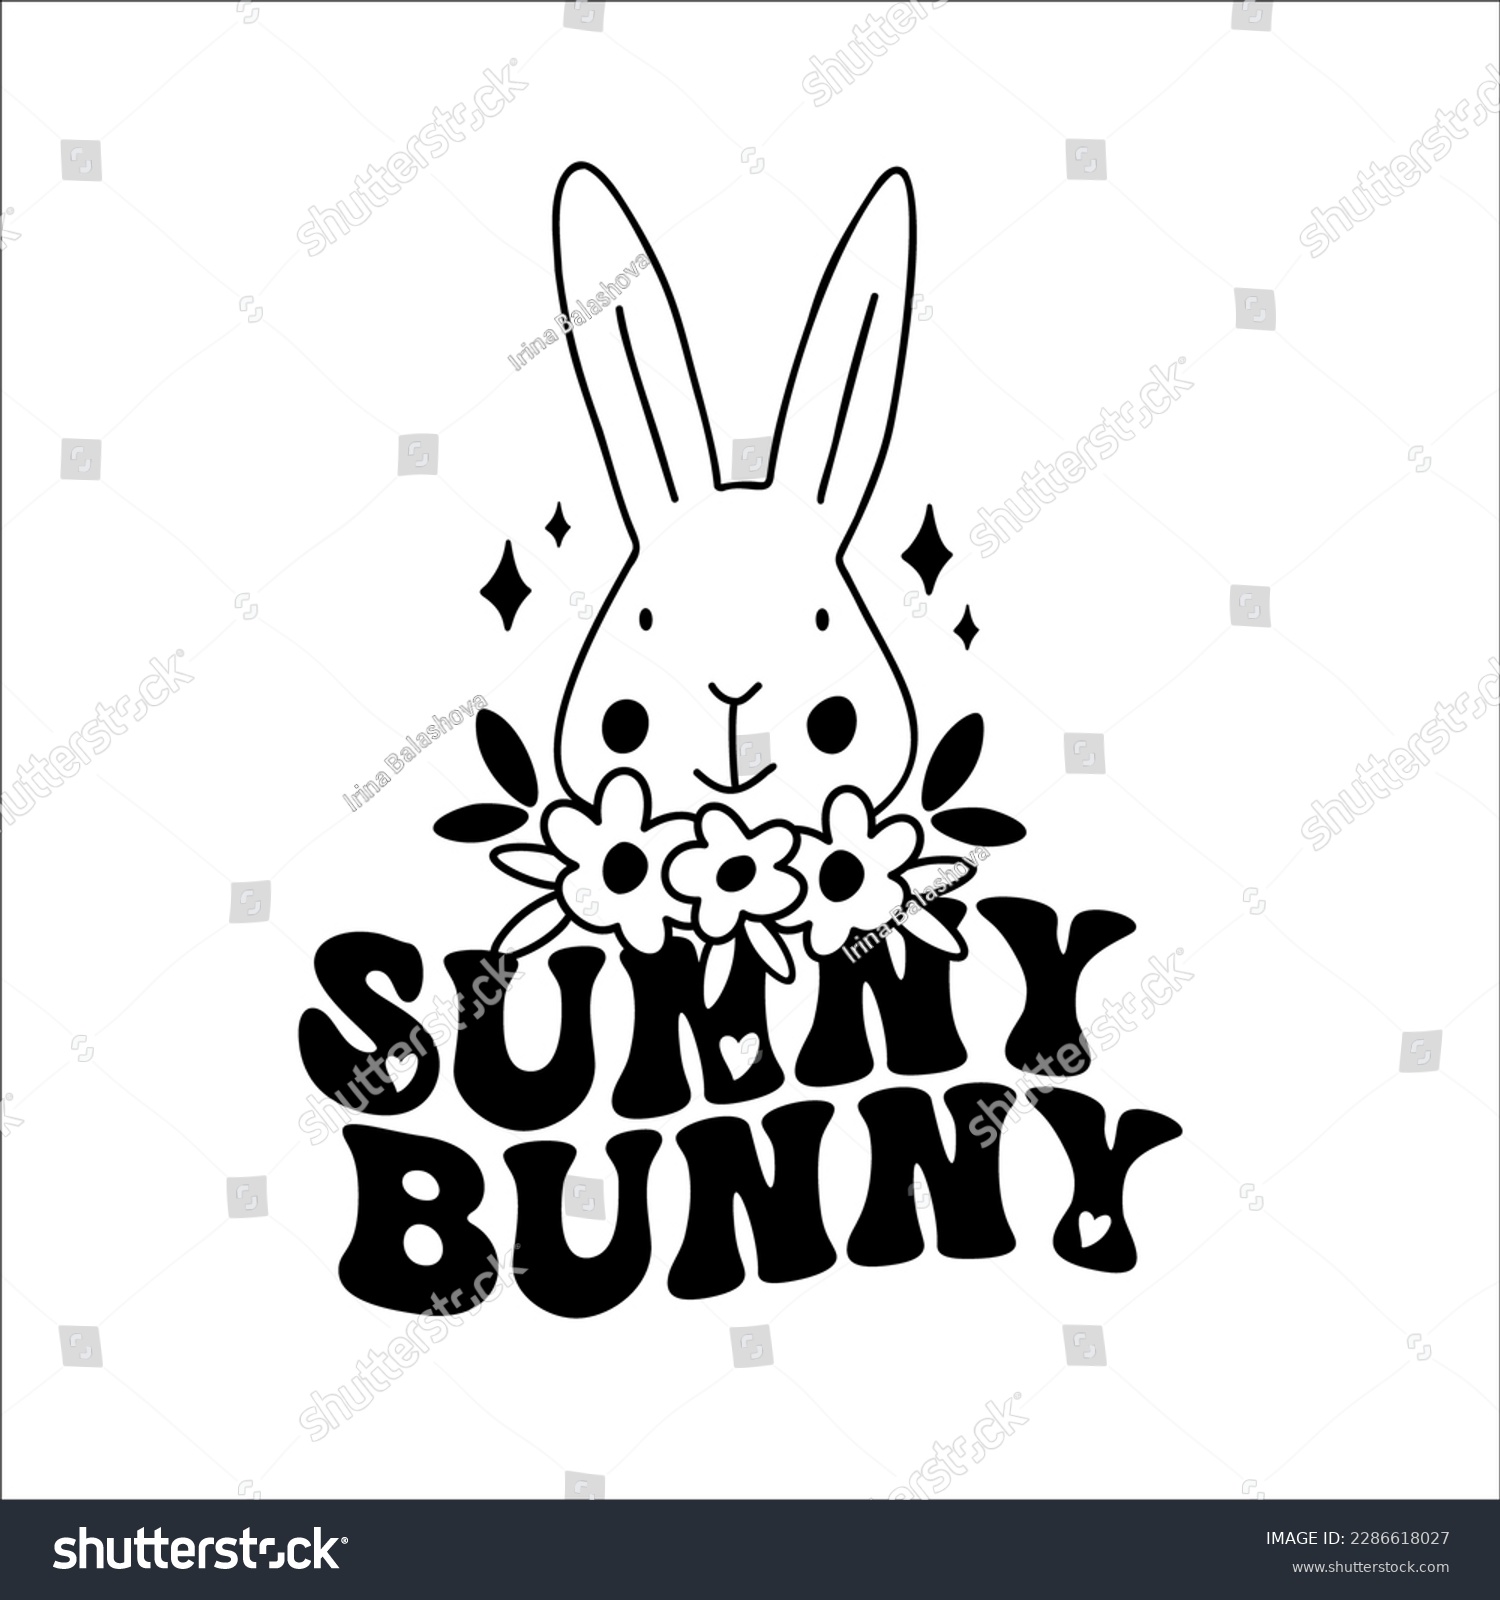 SVG of Sunny bunny SVG Cut File Design in retro style for Cricut and Silhouette. svg